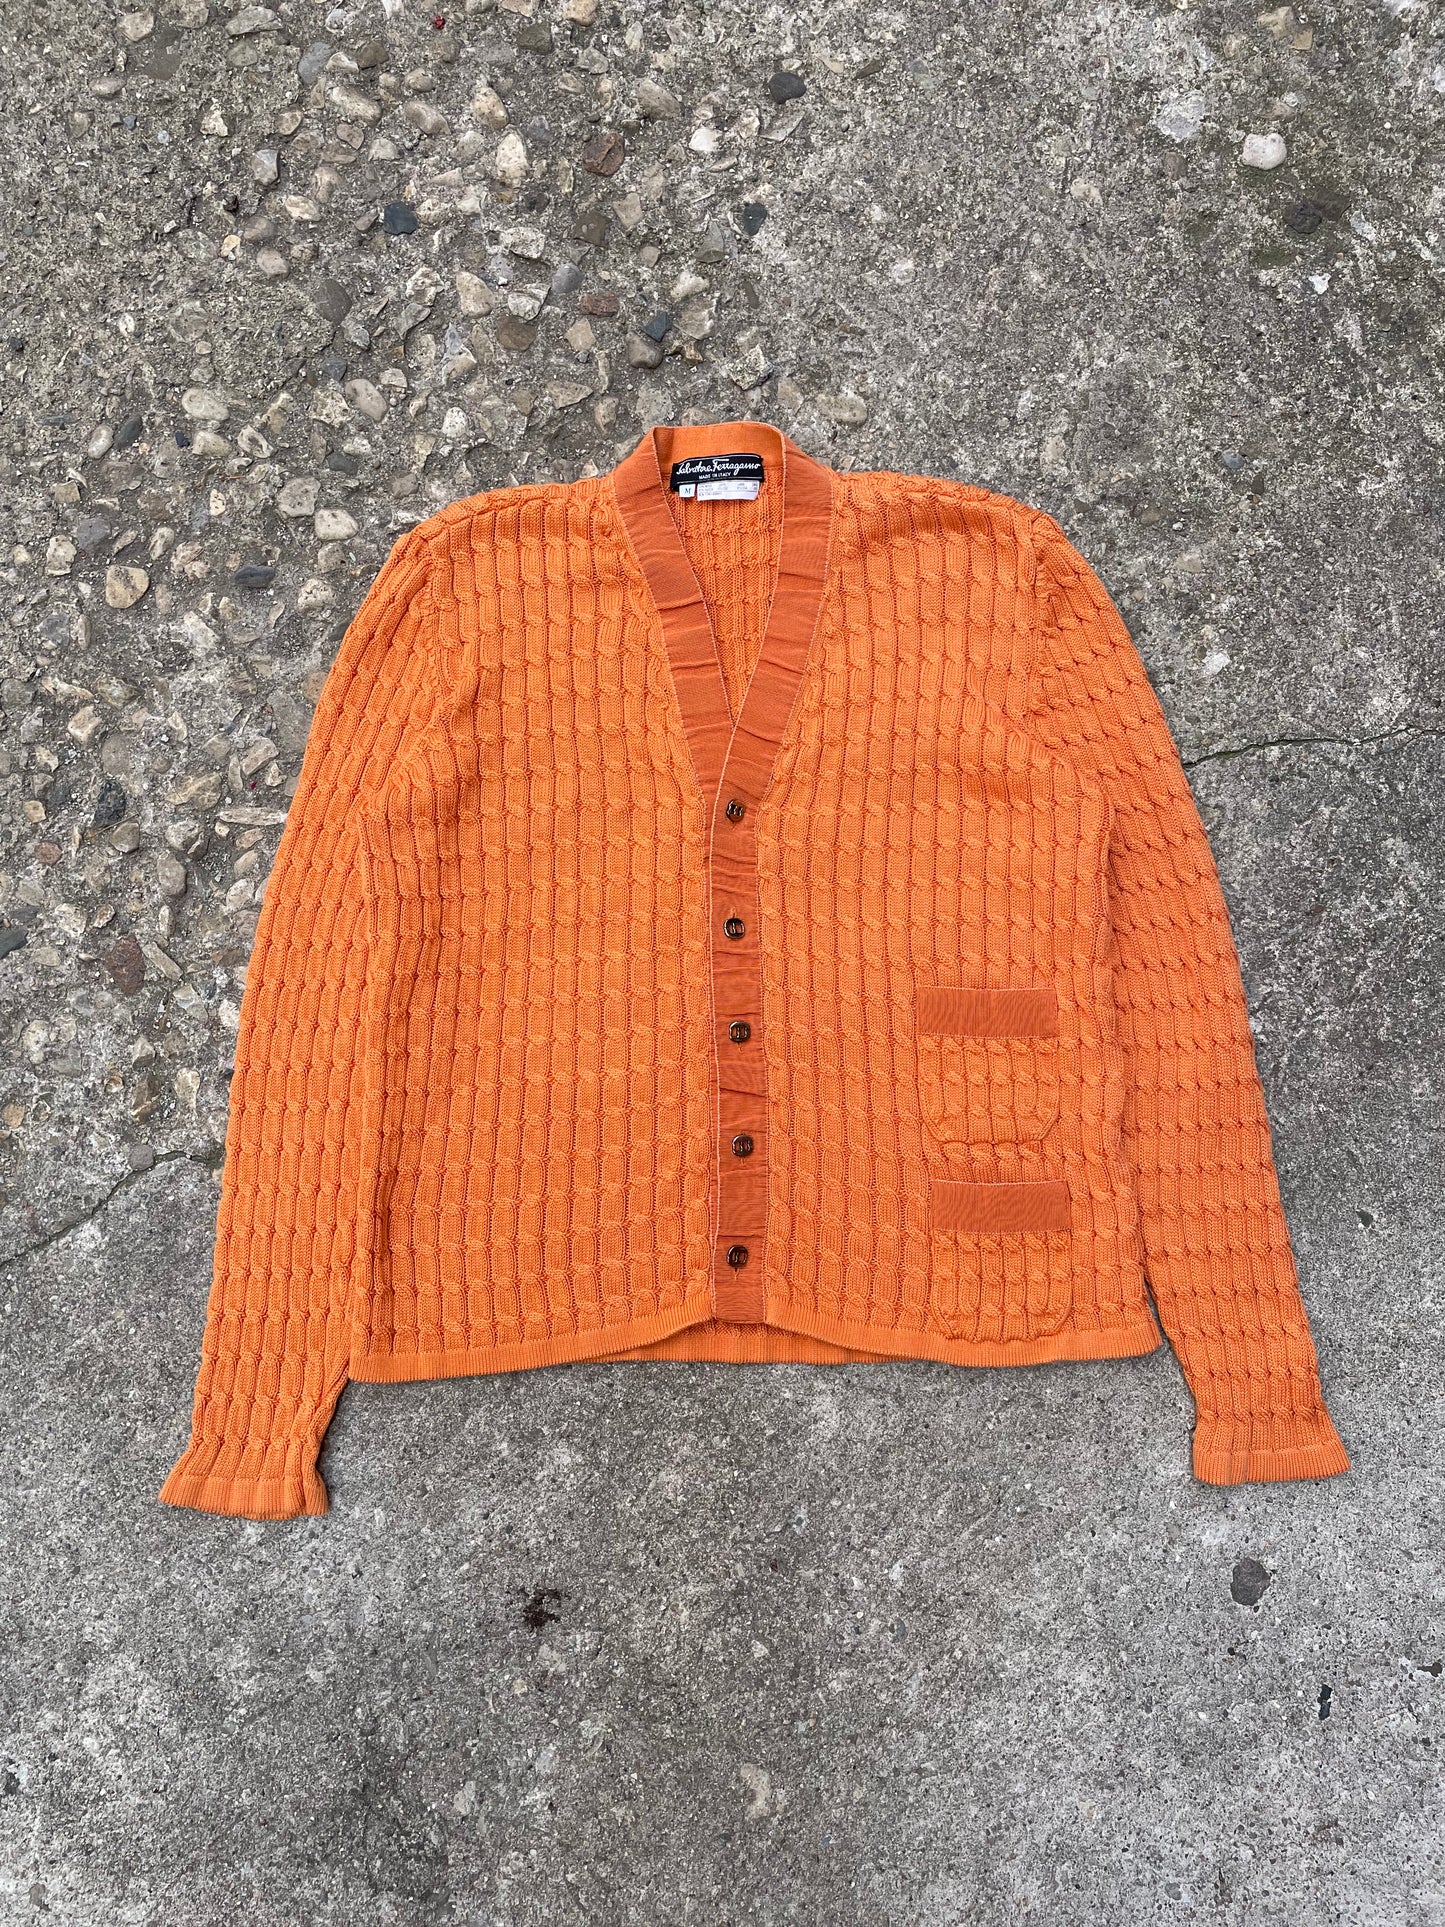 1980's/1990's Salvatore Ferragamo Wool & Rayon Knit Cardigan Sweater - M